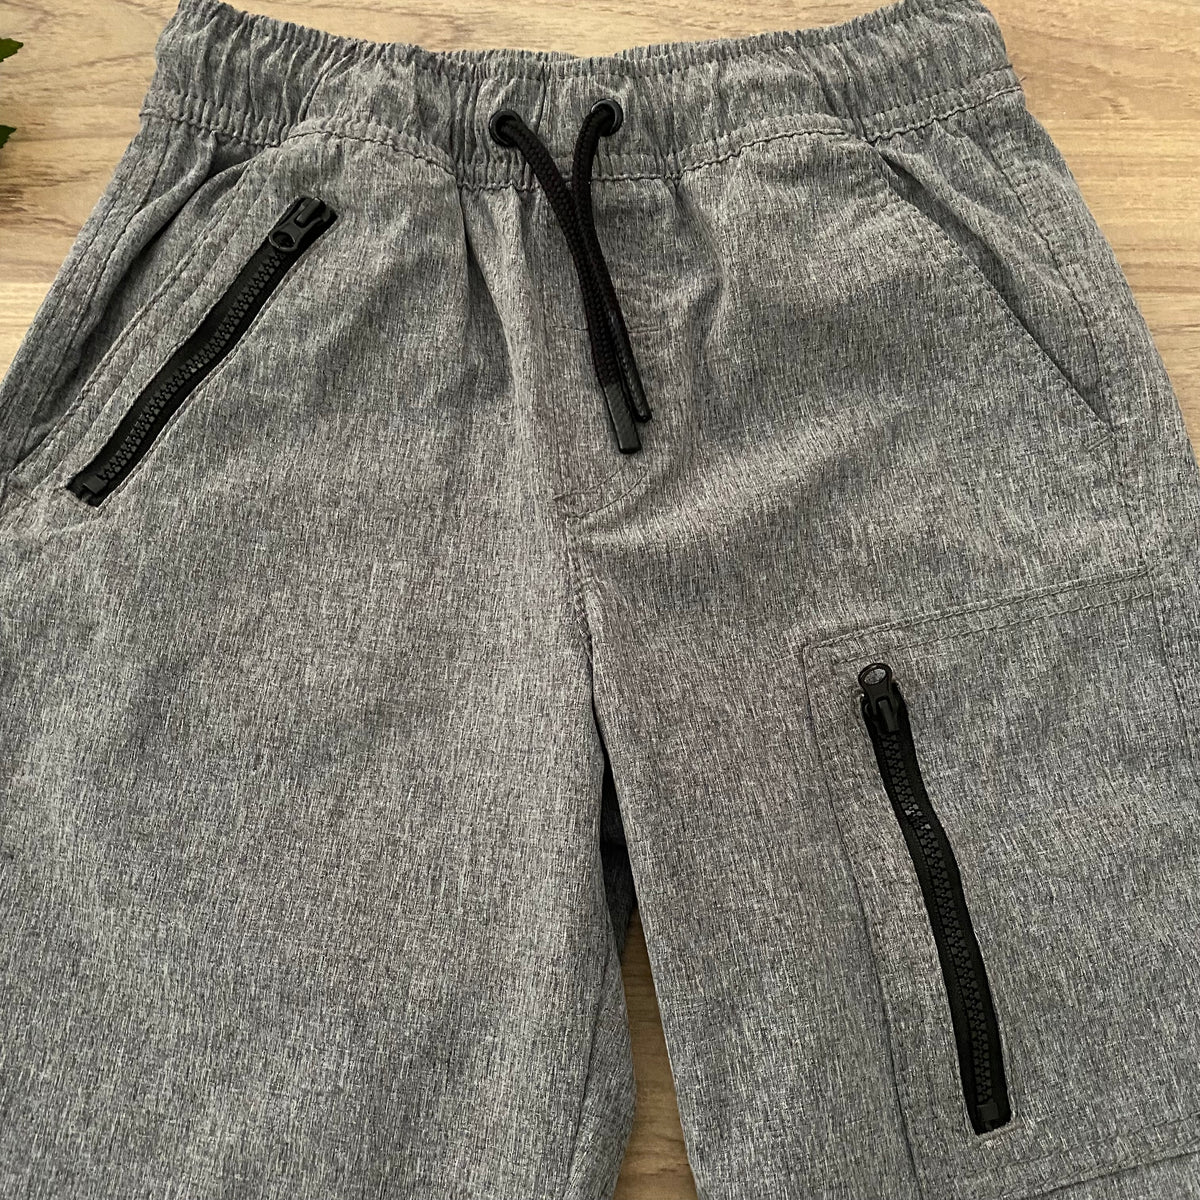 Shorts (Boys Size 6-7)